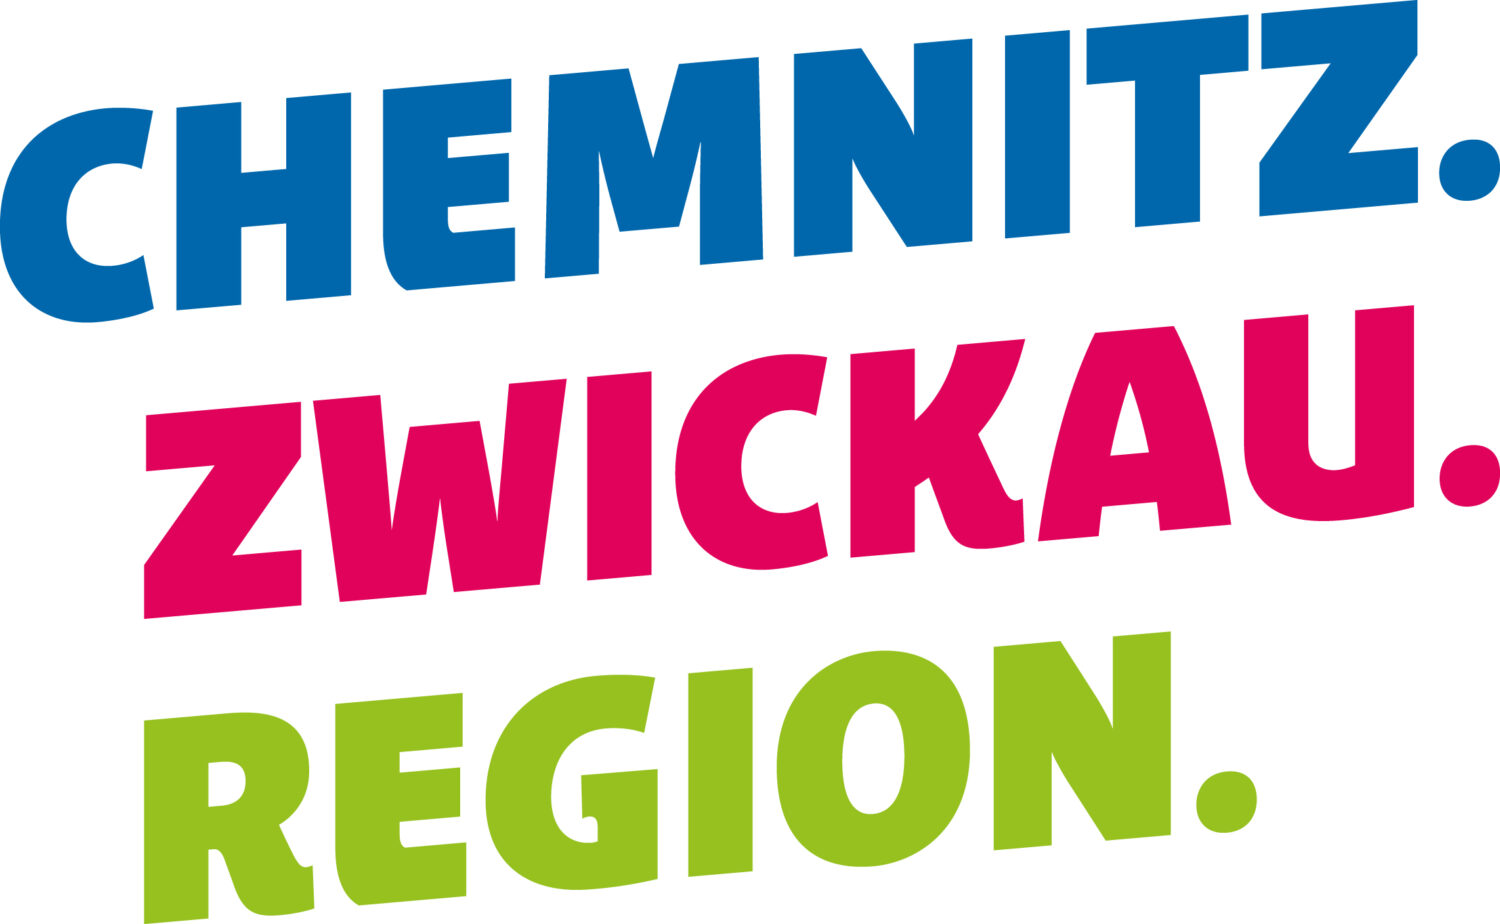 Tourismusverband Chemnitz Zwickau Region e.V.